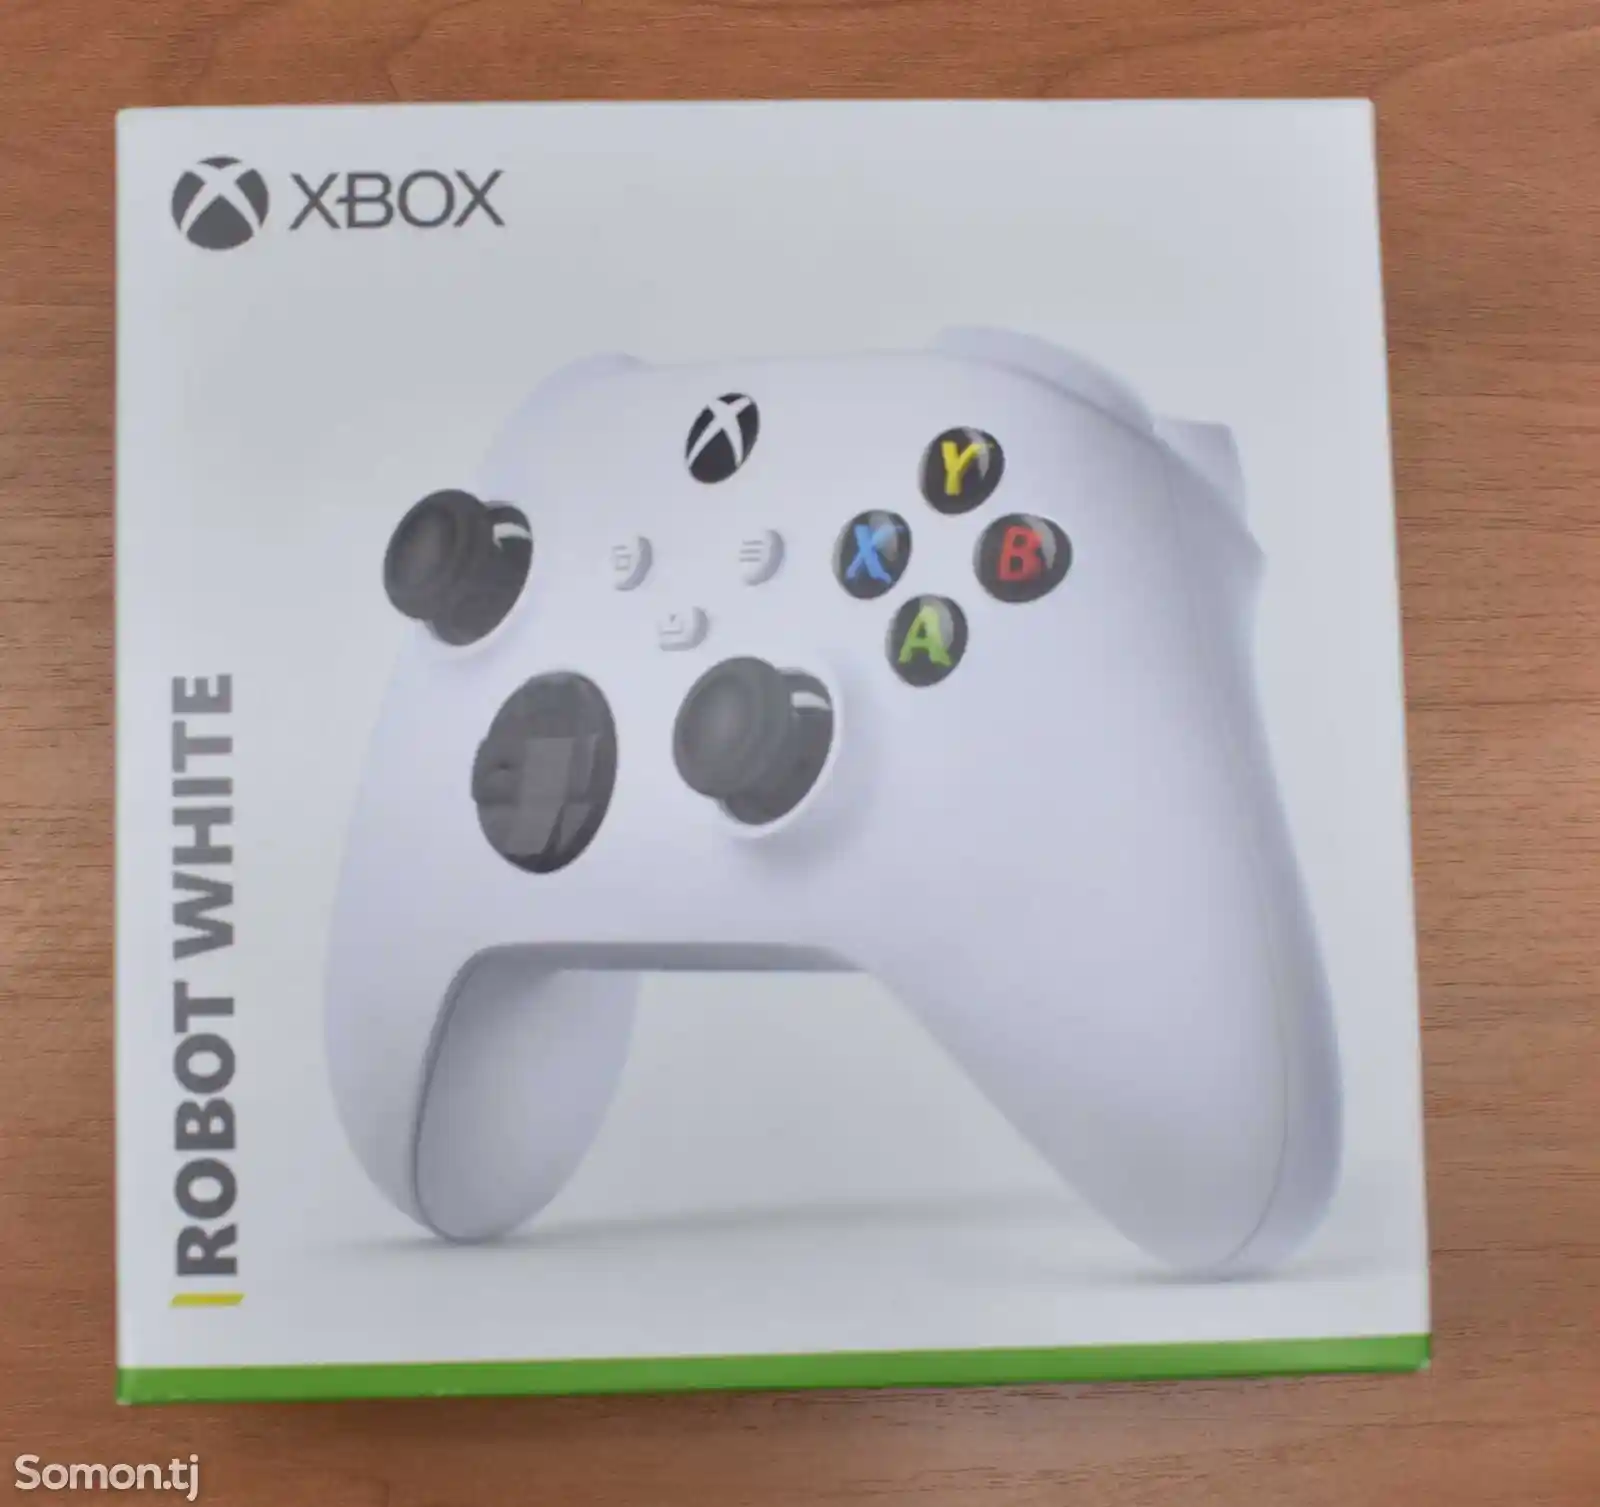 Геймпад Microsoft Xbox Series Robot White